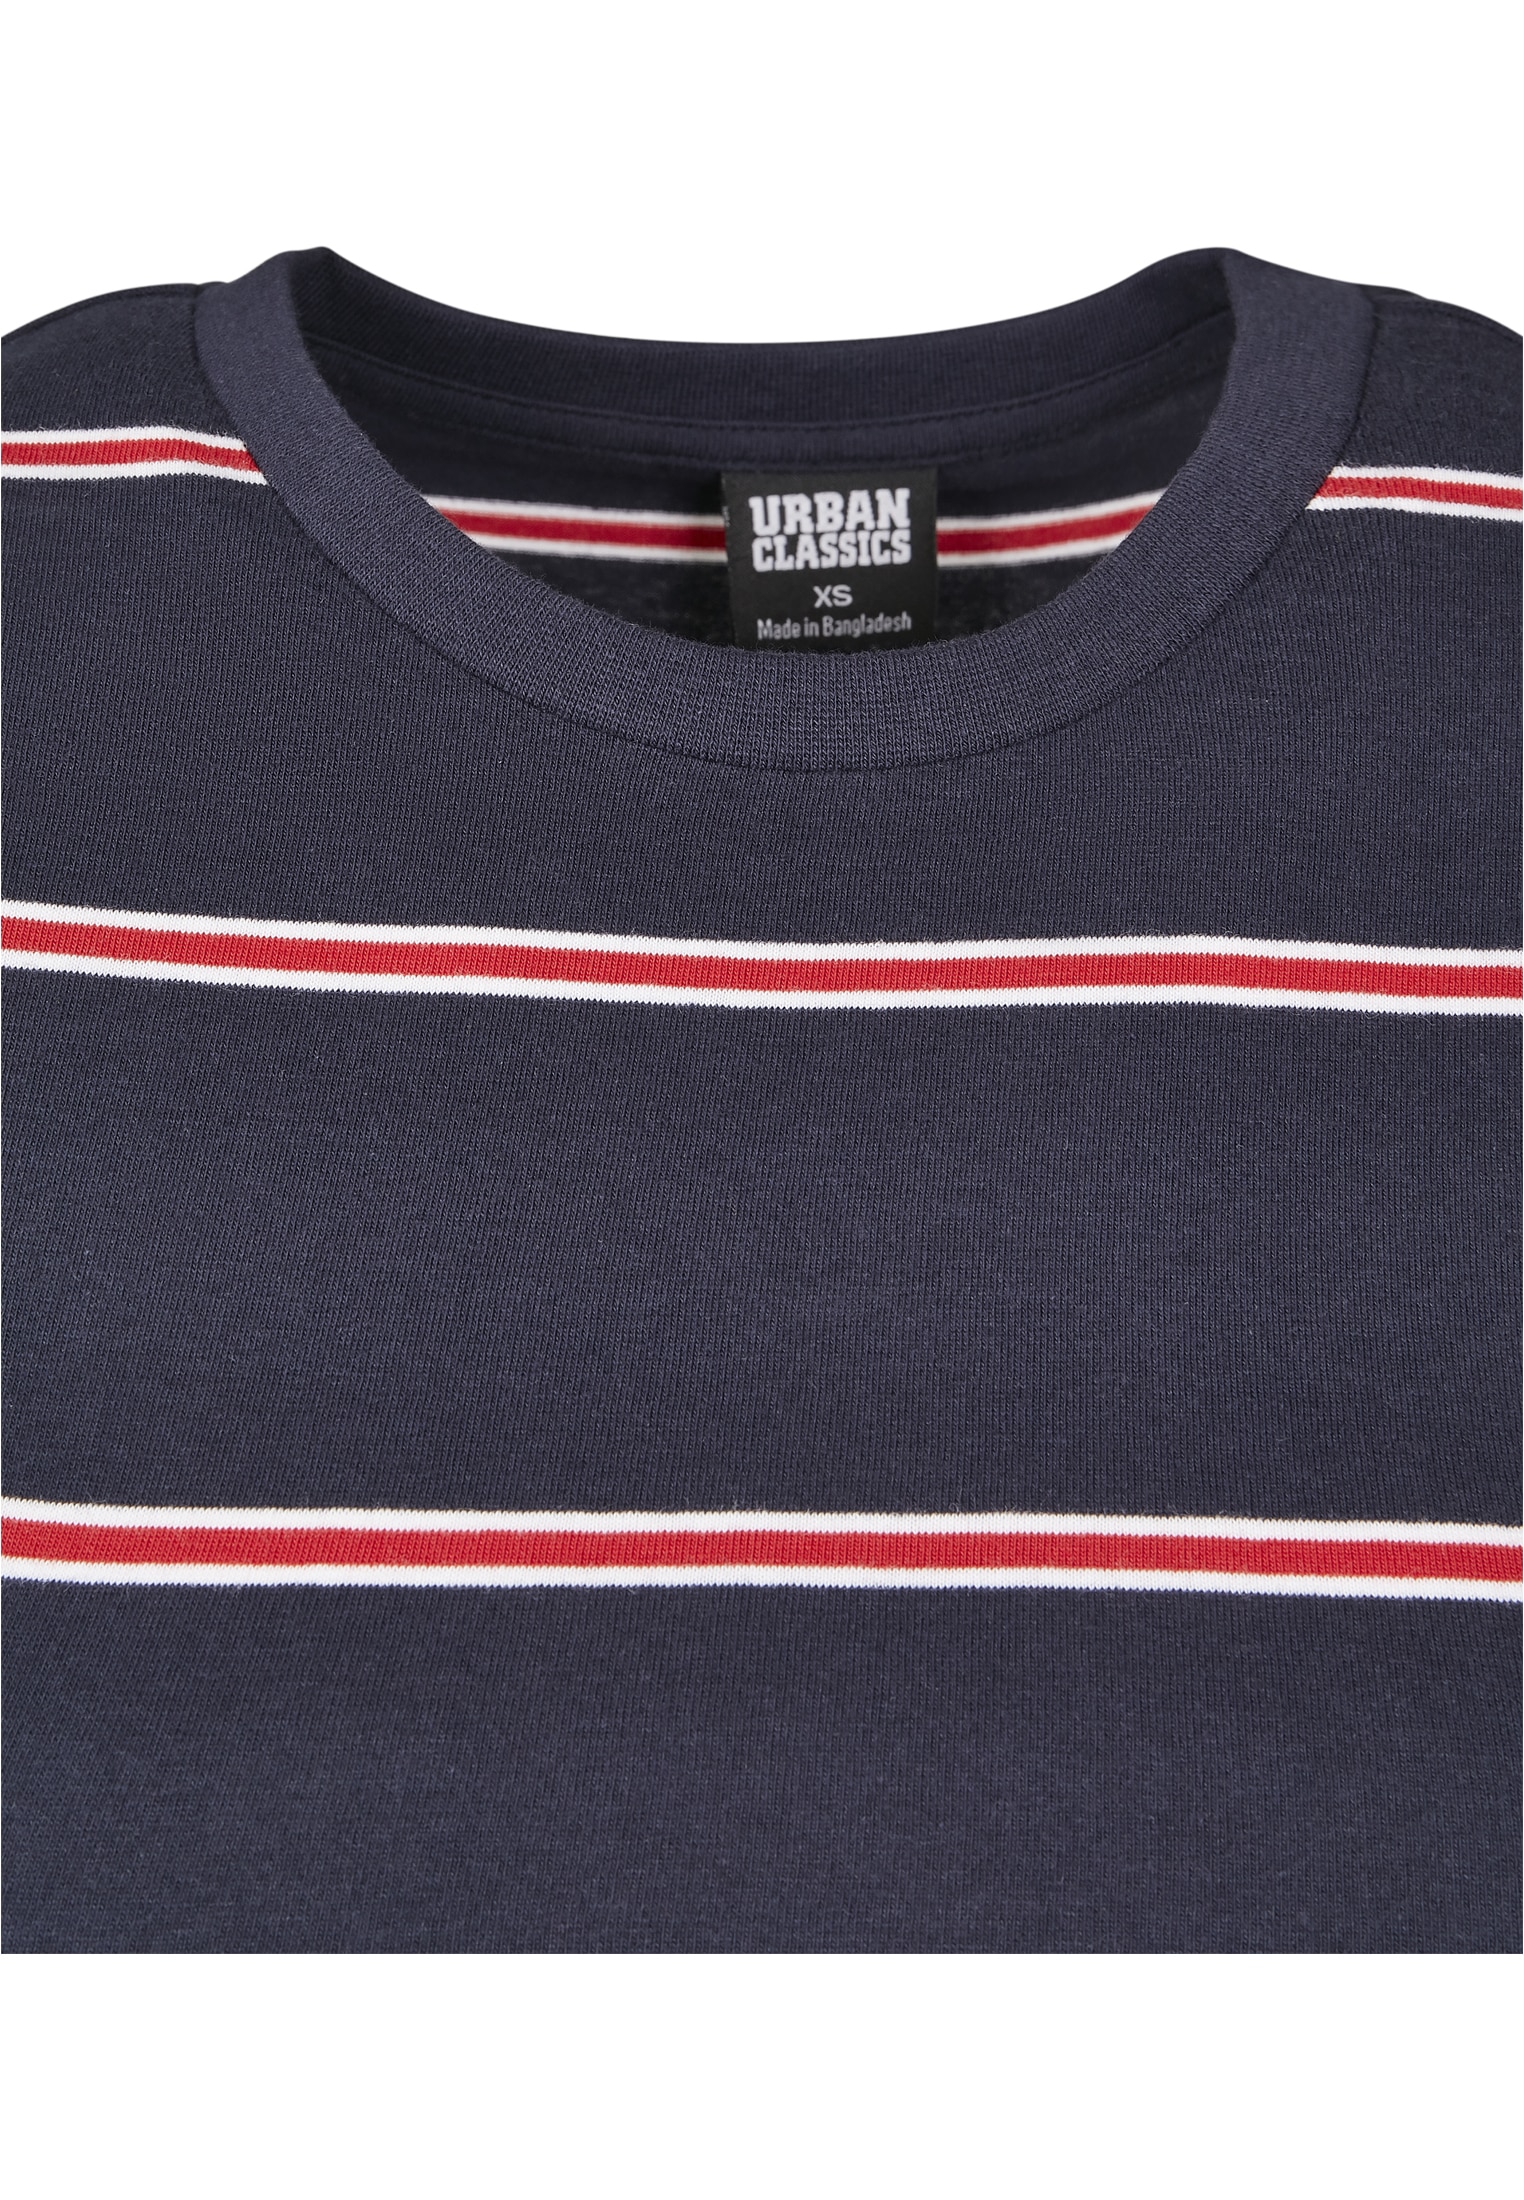 URBAN CLASSICS (1 BAUR Cropped Stripe | Skate Yarn Tee«, online Dyed Ladies T-Shirt tlg.) bestellen »Damen